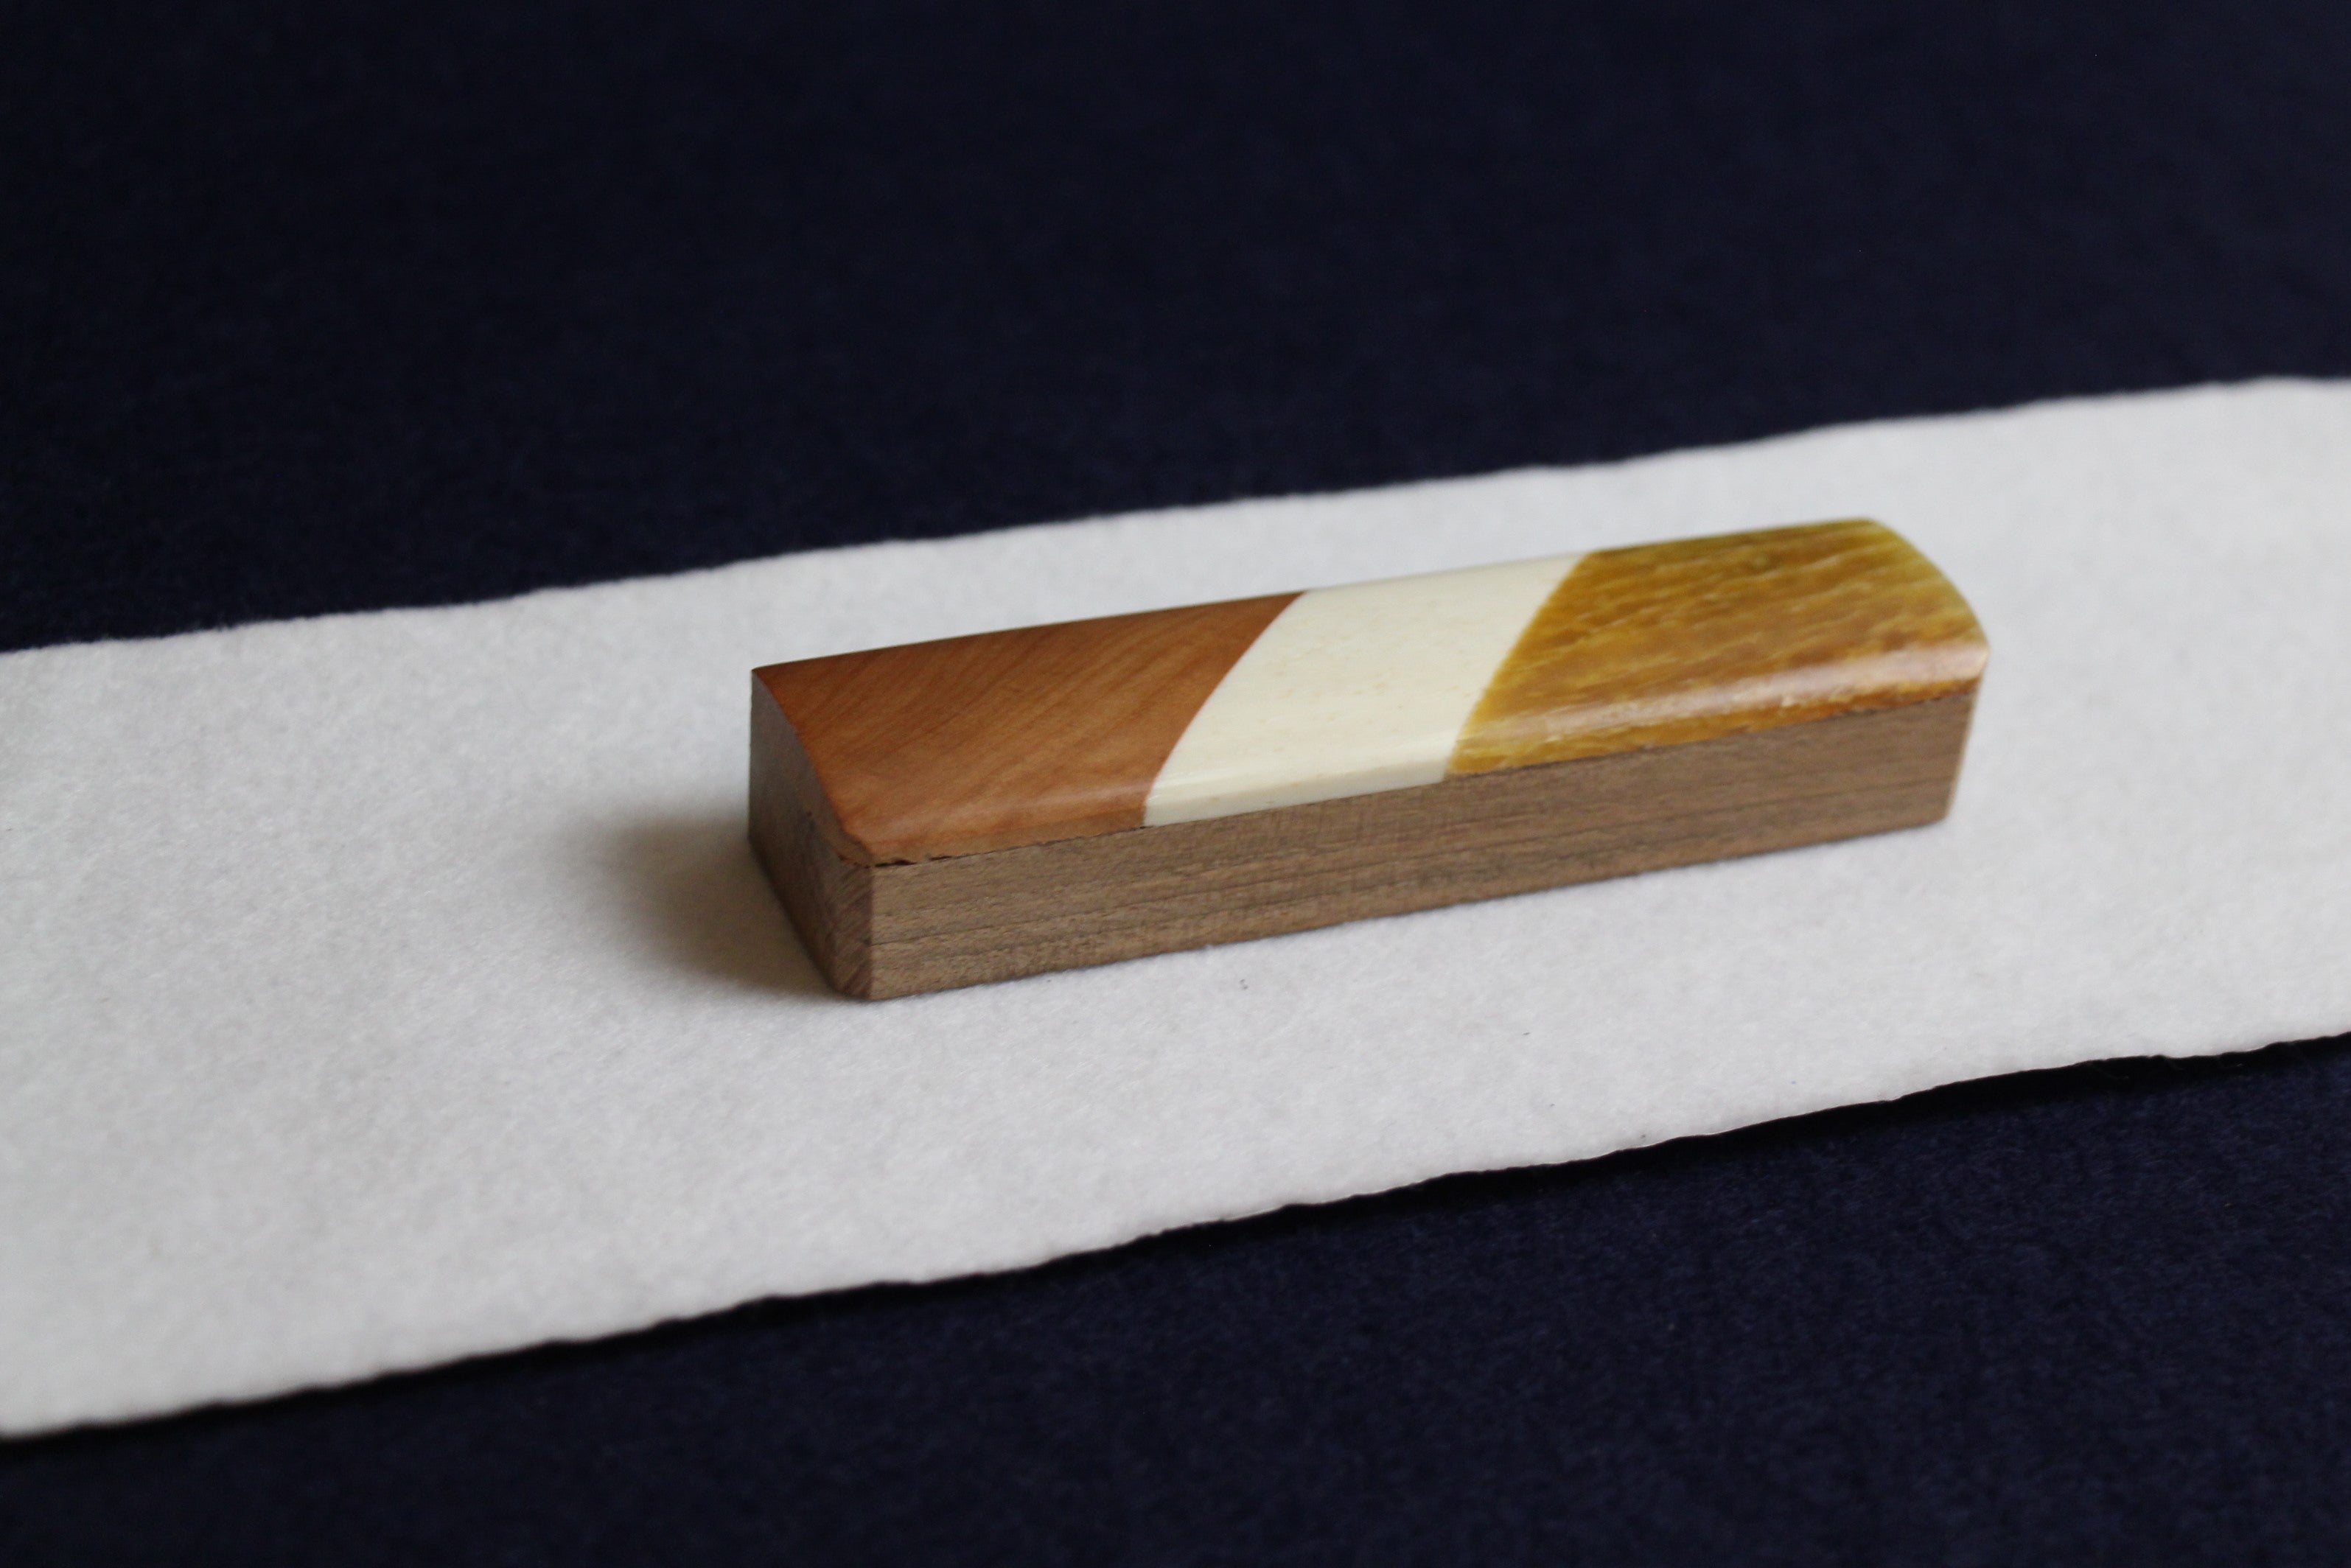 Horn, wood and bone 3 colour makta block with sanding paper